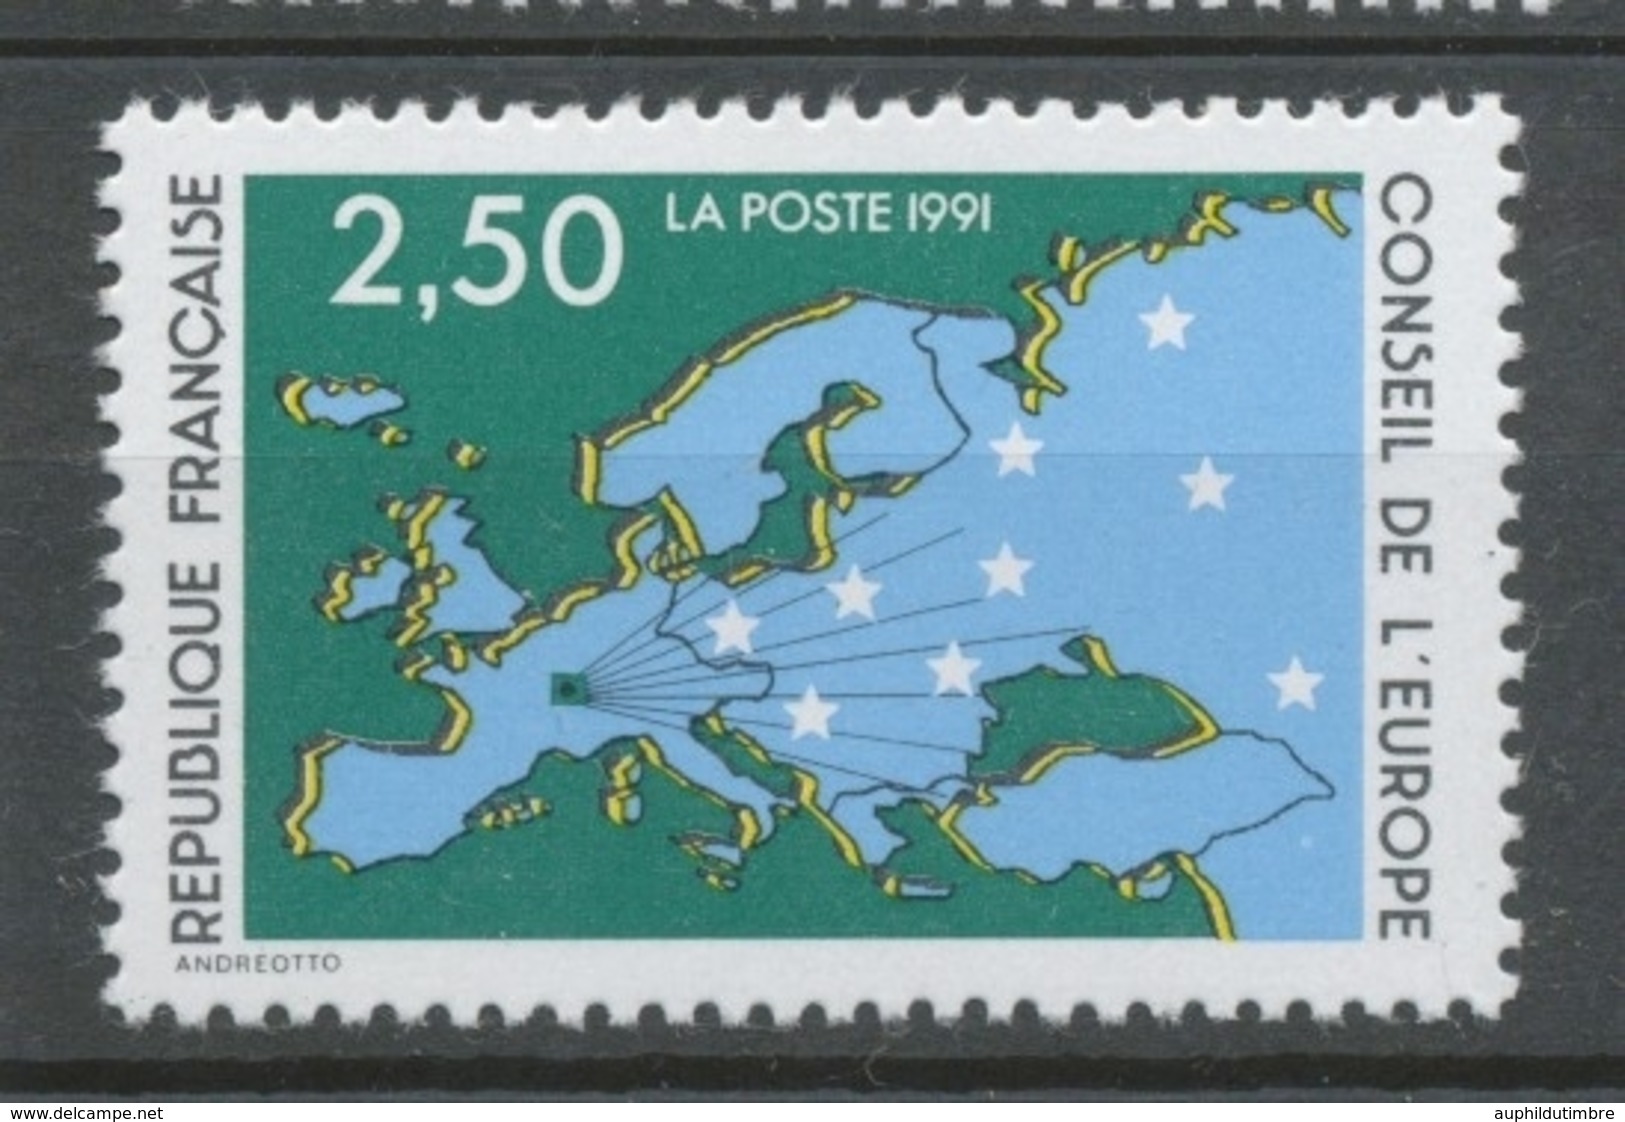 Service N°106 Conseil De L' Europe. 2f.50  Multicolore ZS106 - Ongebruikt